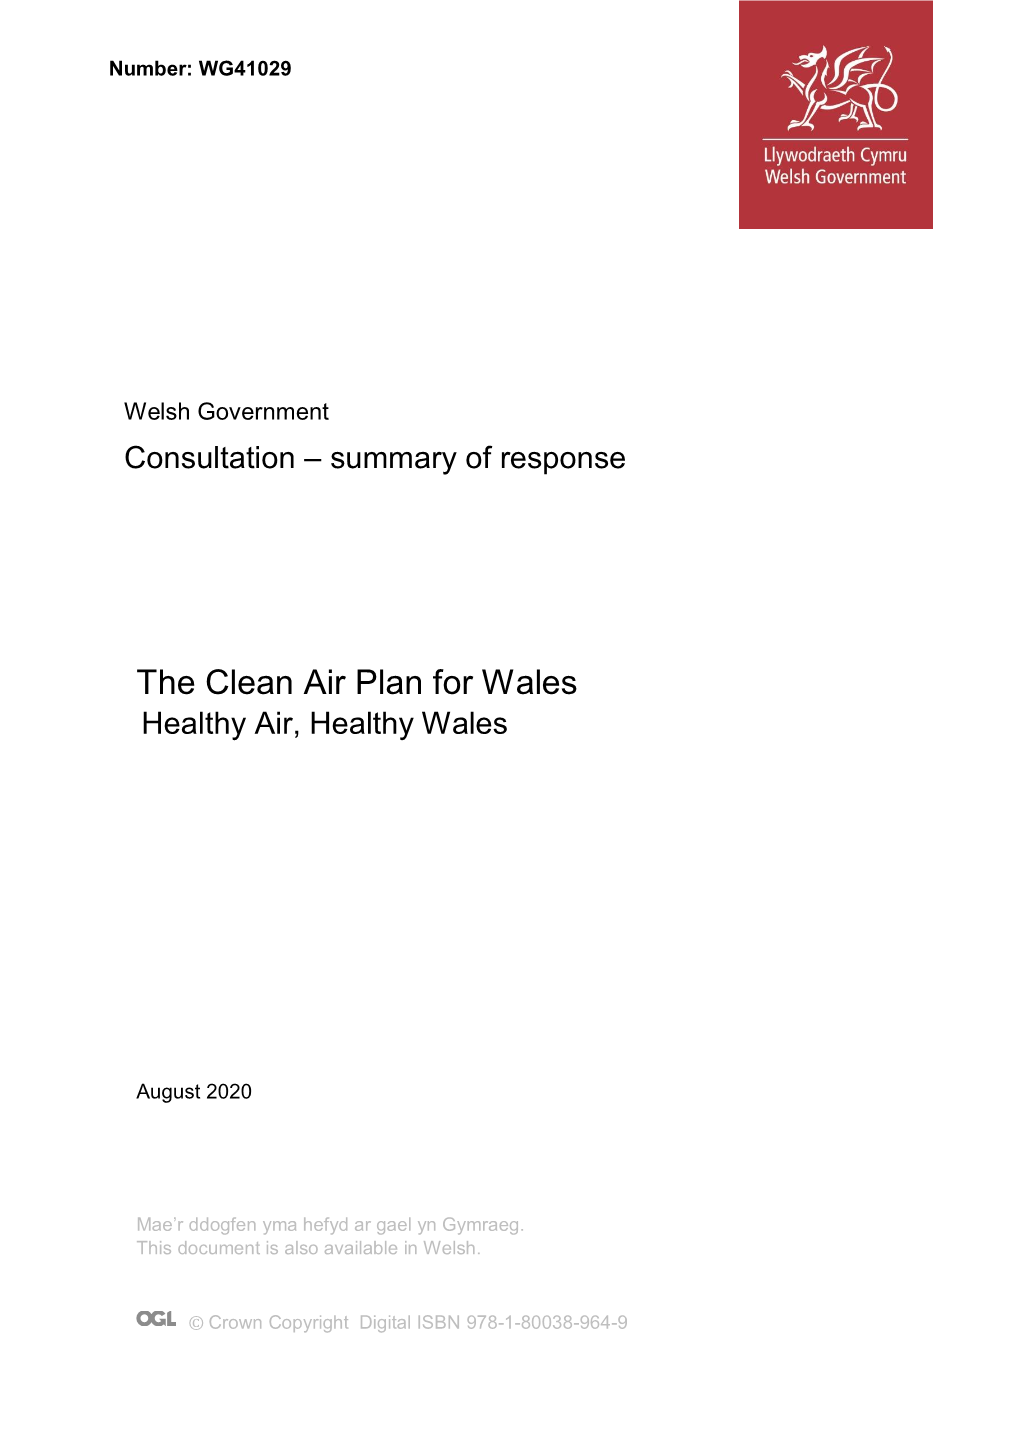 Clean Air Plan for Wales Healthy Air, Healthy Wales